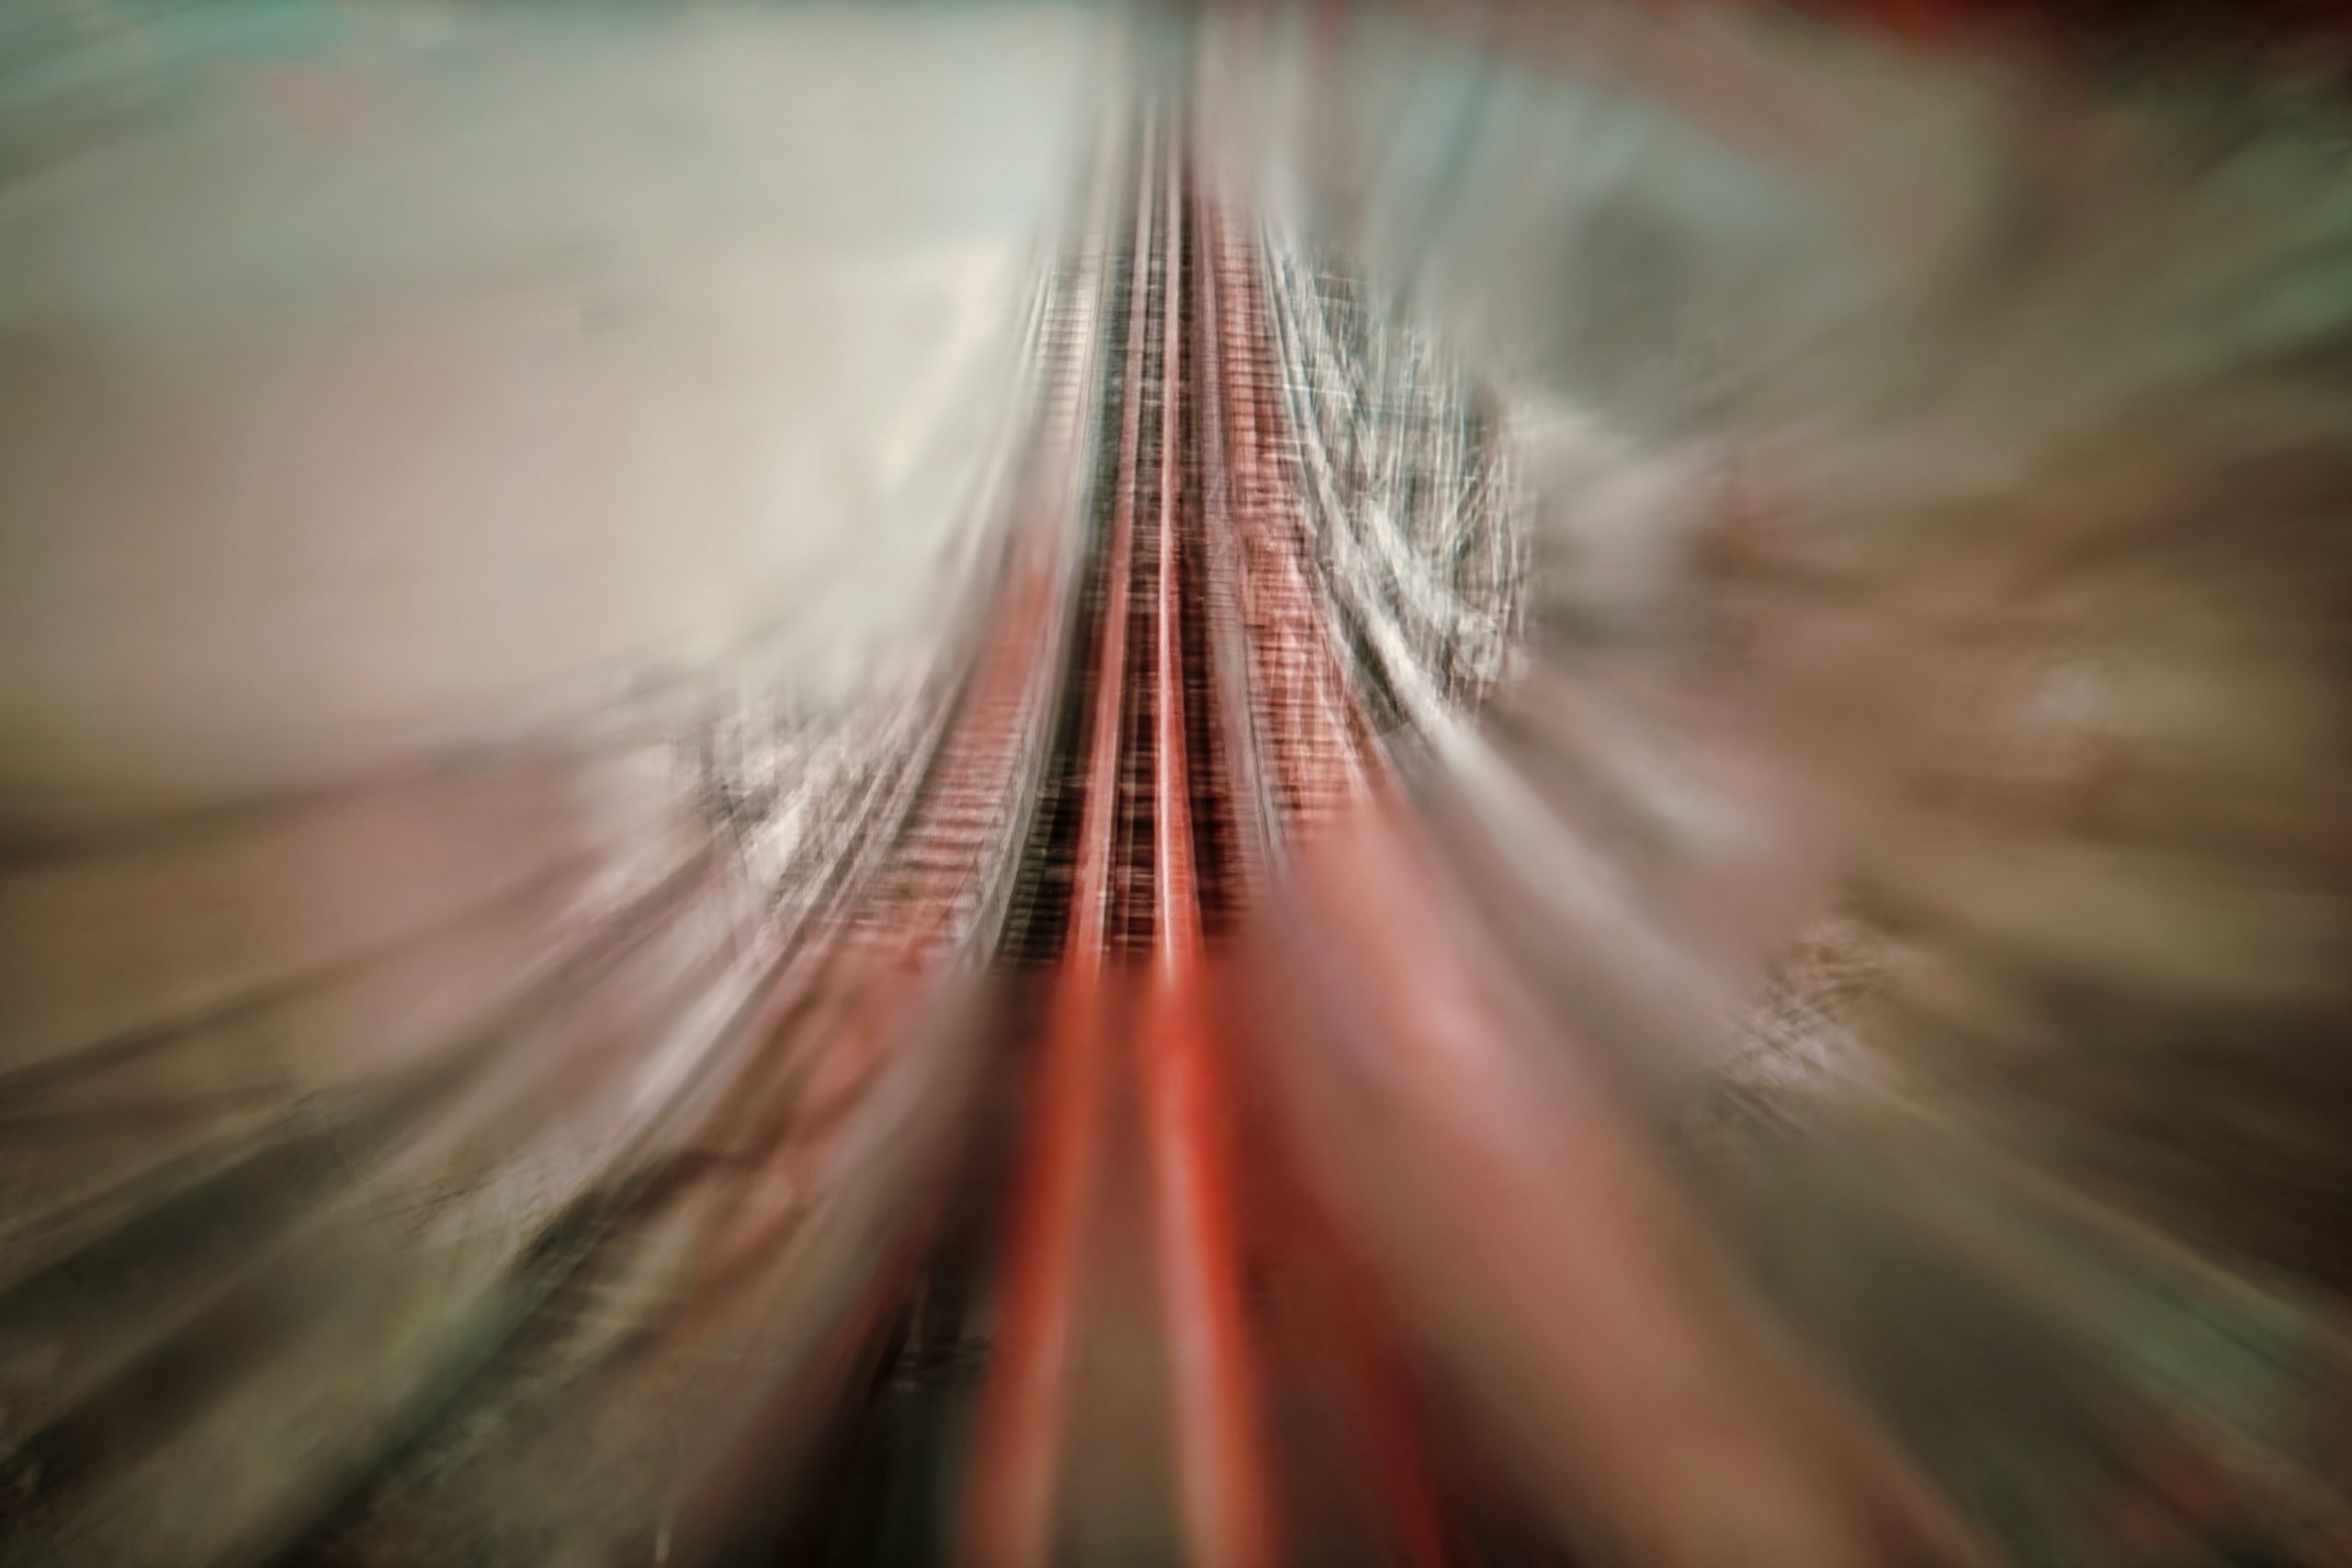 blurred image of roller coaster